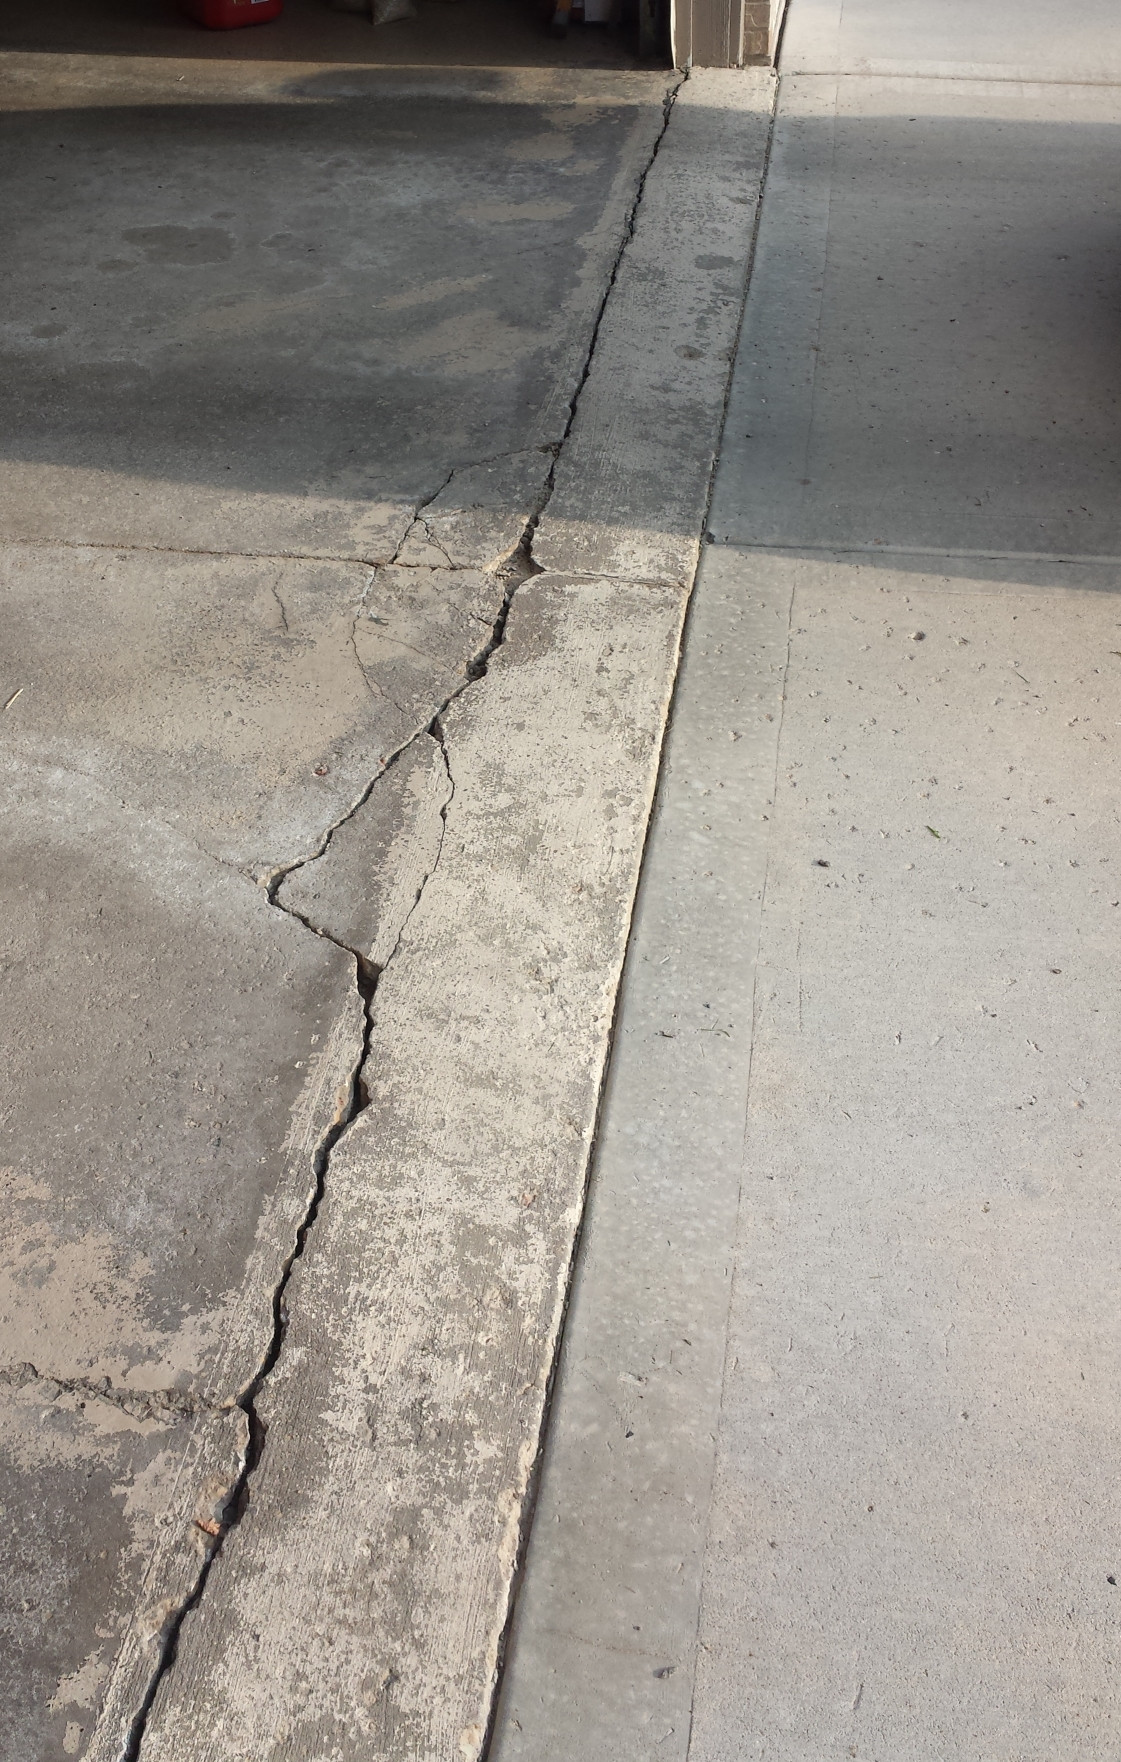 How to repair garage floor concrete damage near apron? - Home ...